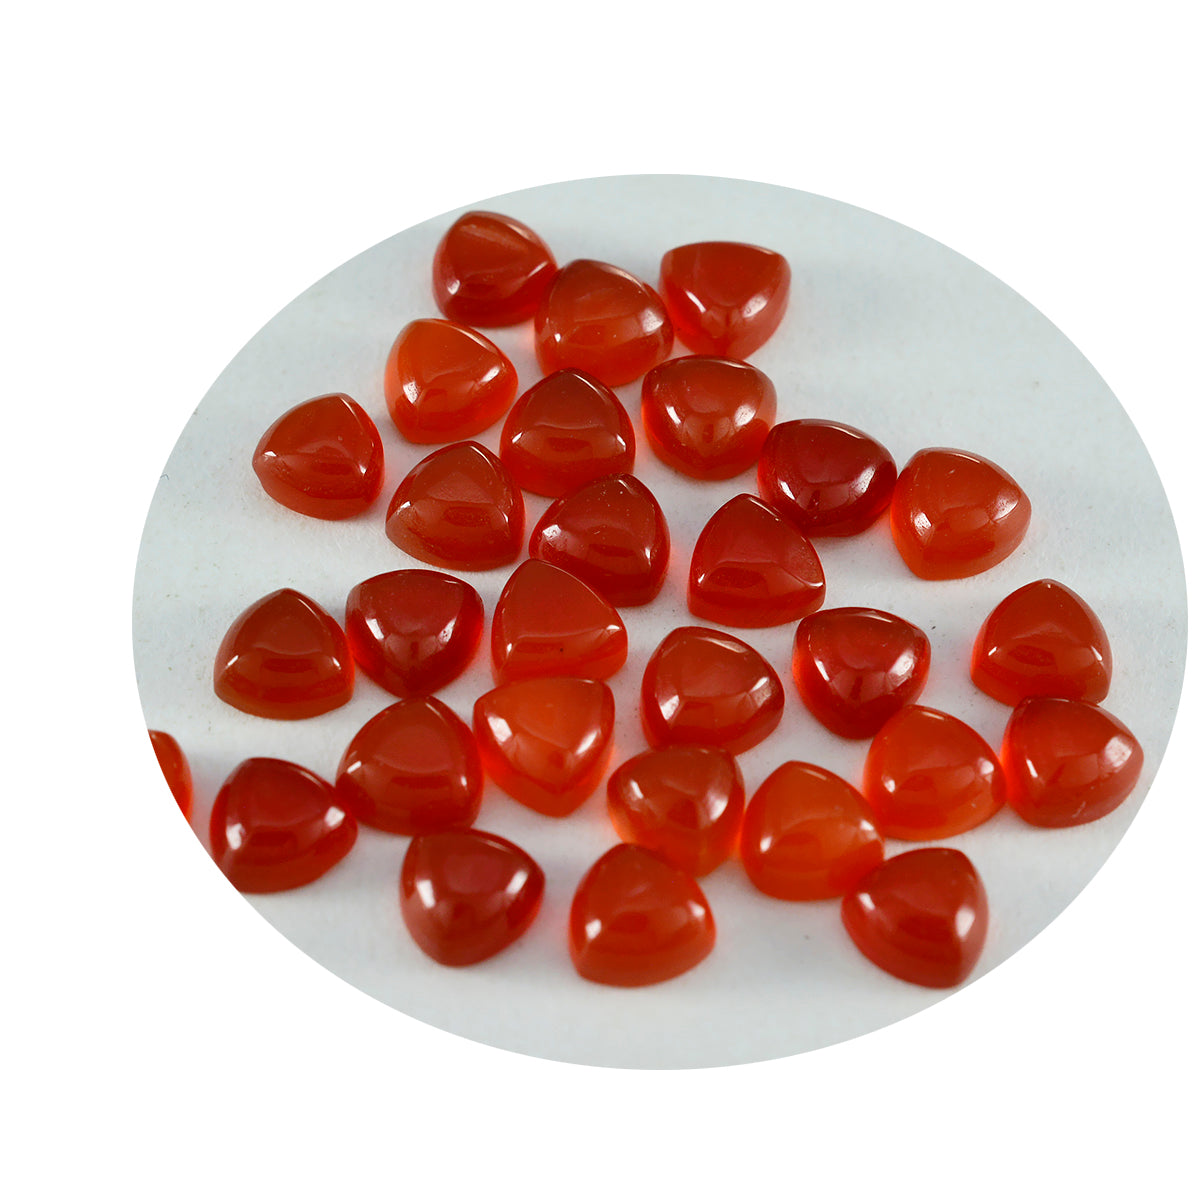 Riyogems 1PC Red Onyx Cabochon 4x4 mm Trillion Shape nice-looking Quality Loose Stone